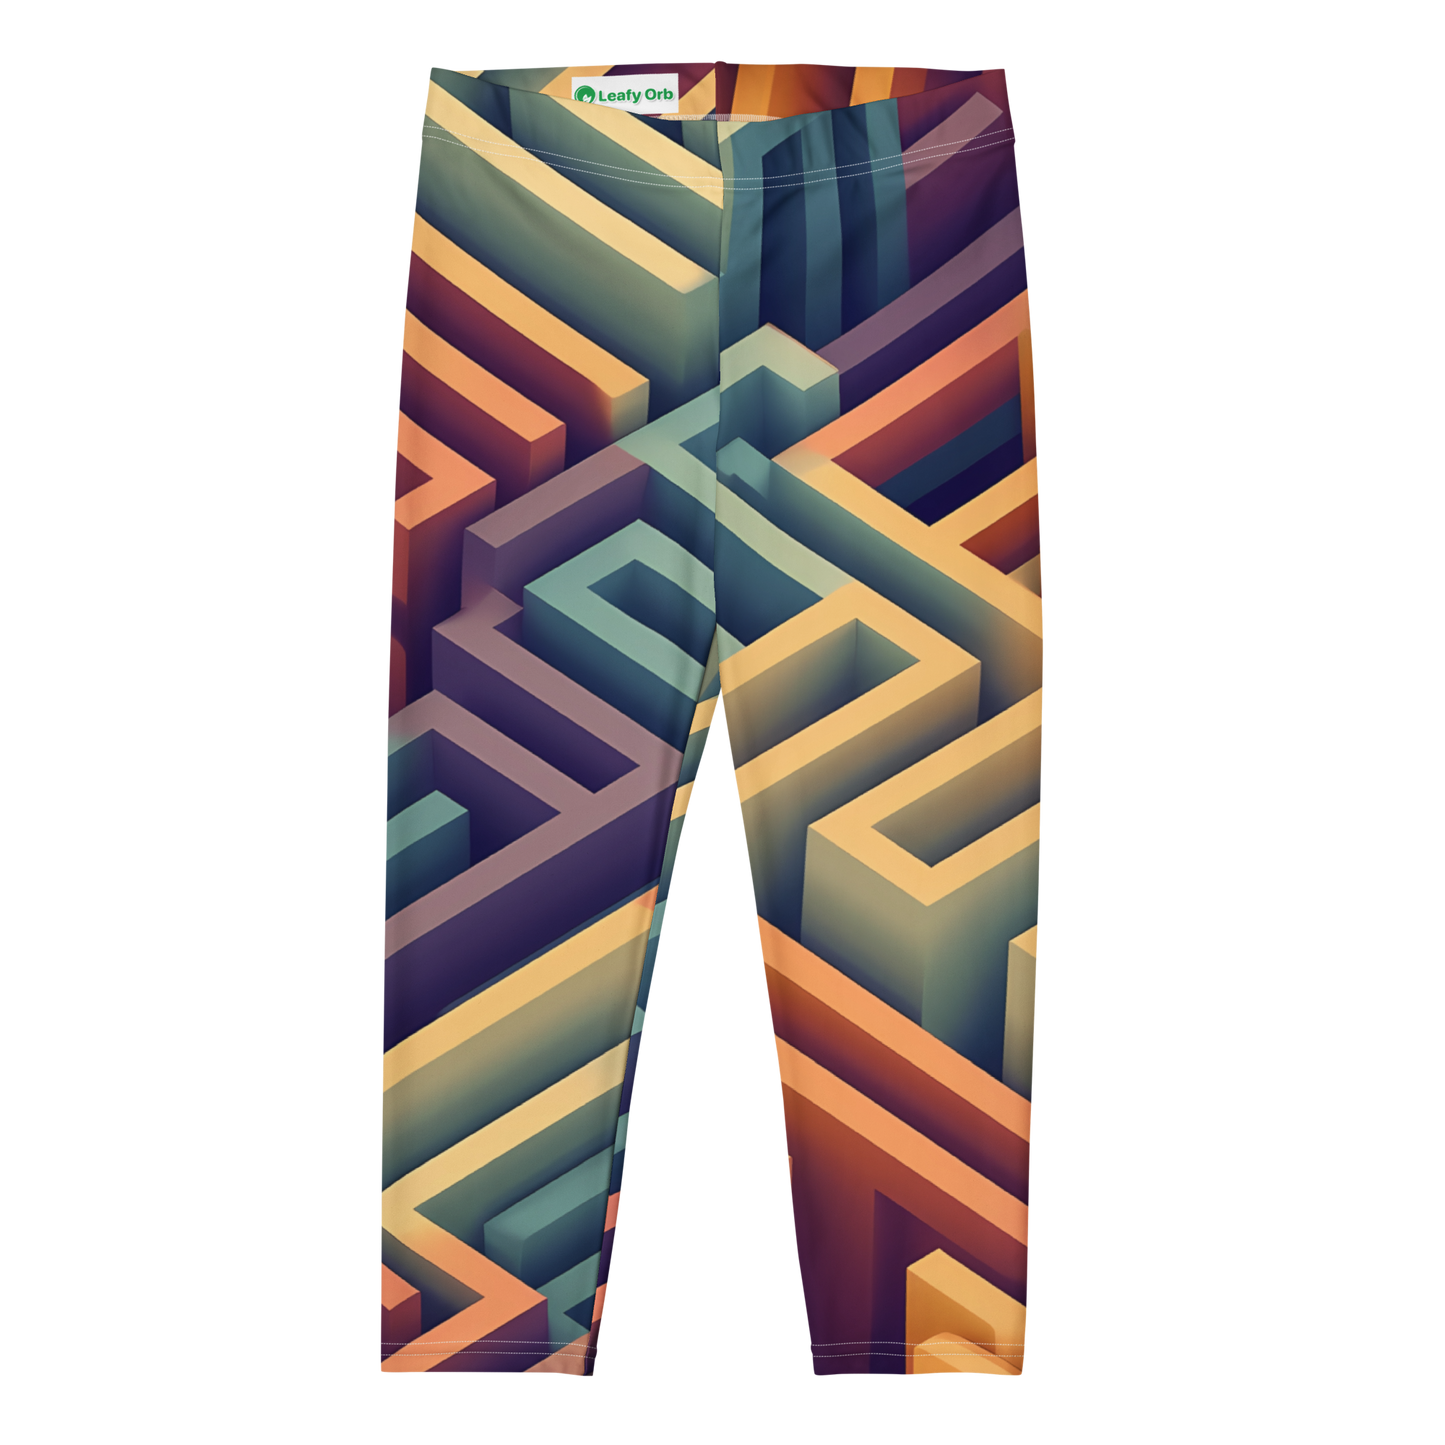 3D Maze Illusion | 3D Patterns | All-Over Print Capri Leggings - #3